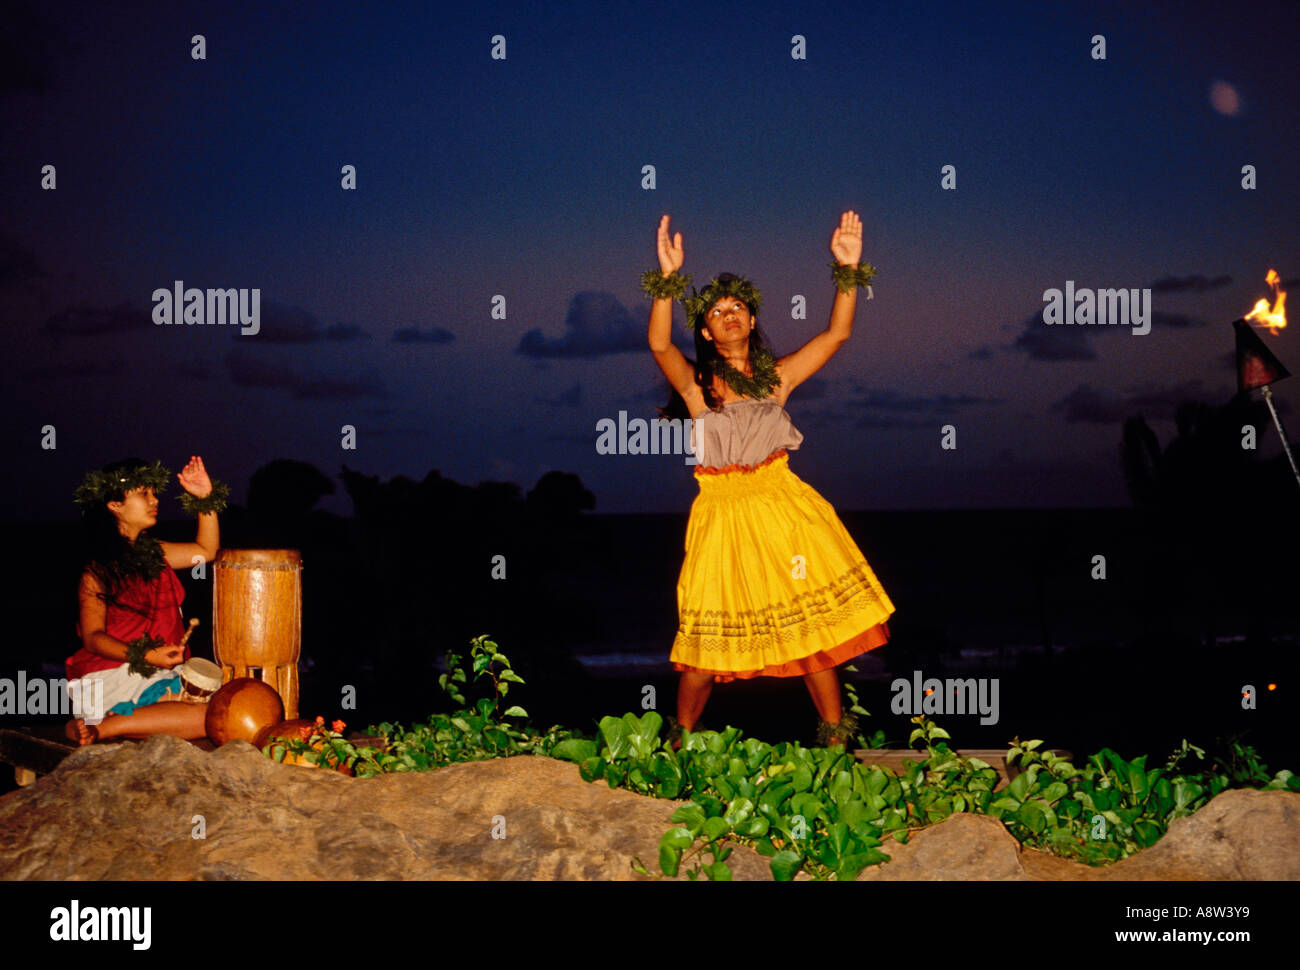 Hawaiianer, hawaiische Frauen, Hula Tänzer, Hula Tanz, Musiker, Schlagzeuger, Taschenlampe Beleuchtung Zeremonie, Poipu, Kauai Kauai Insel, Hawaii, United States Stockfoto